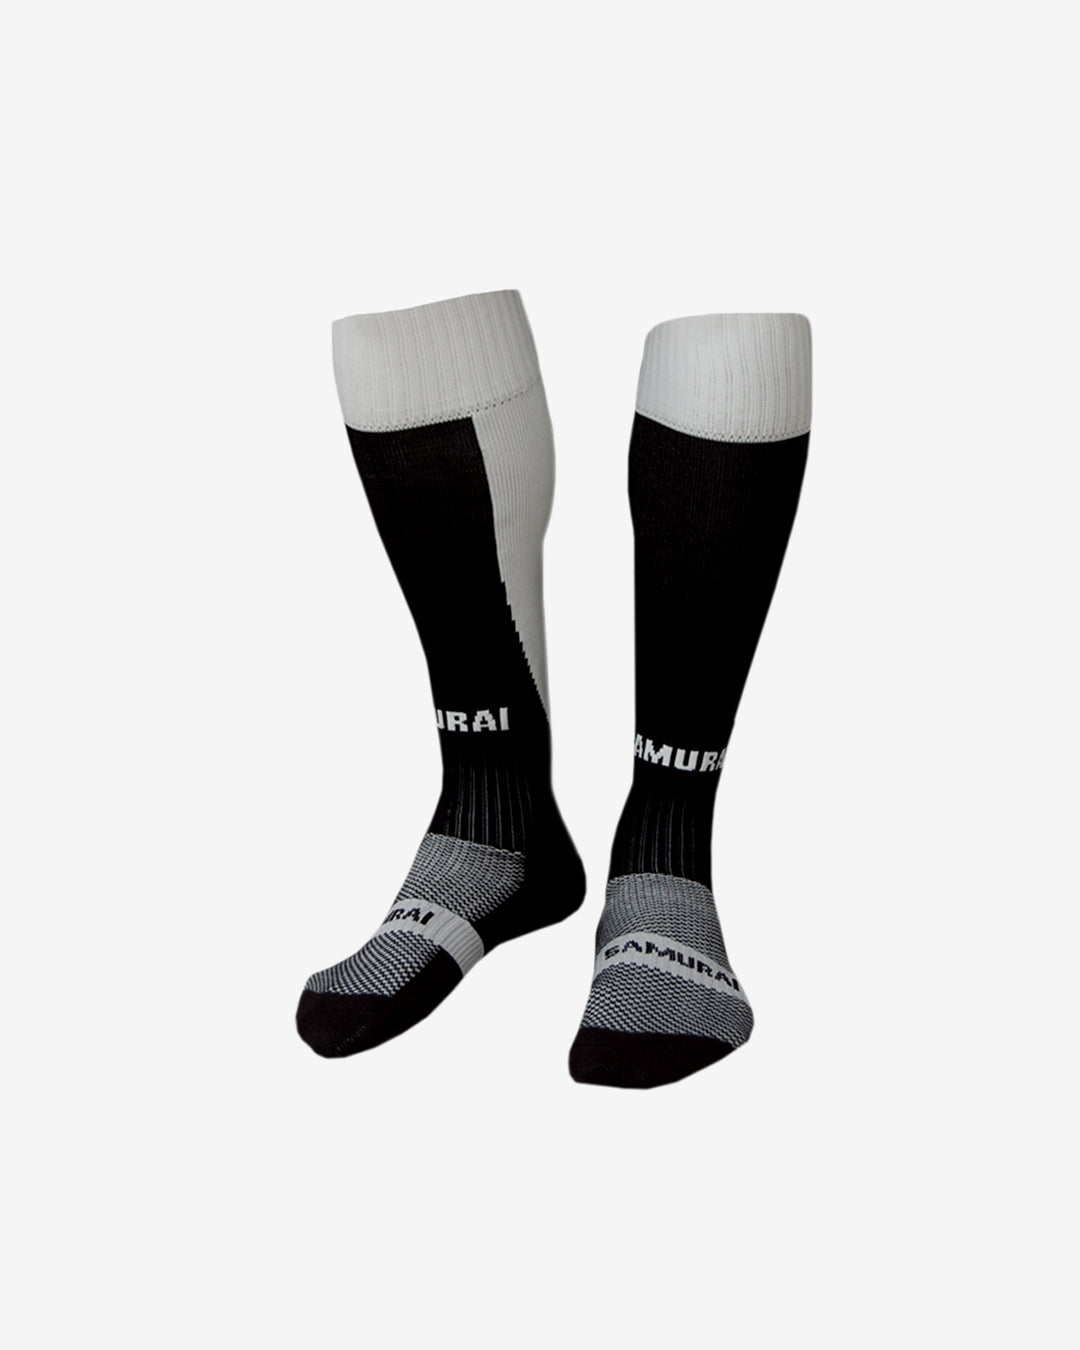 Hc: 9630 - Tri Nation Socks